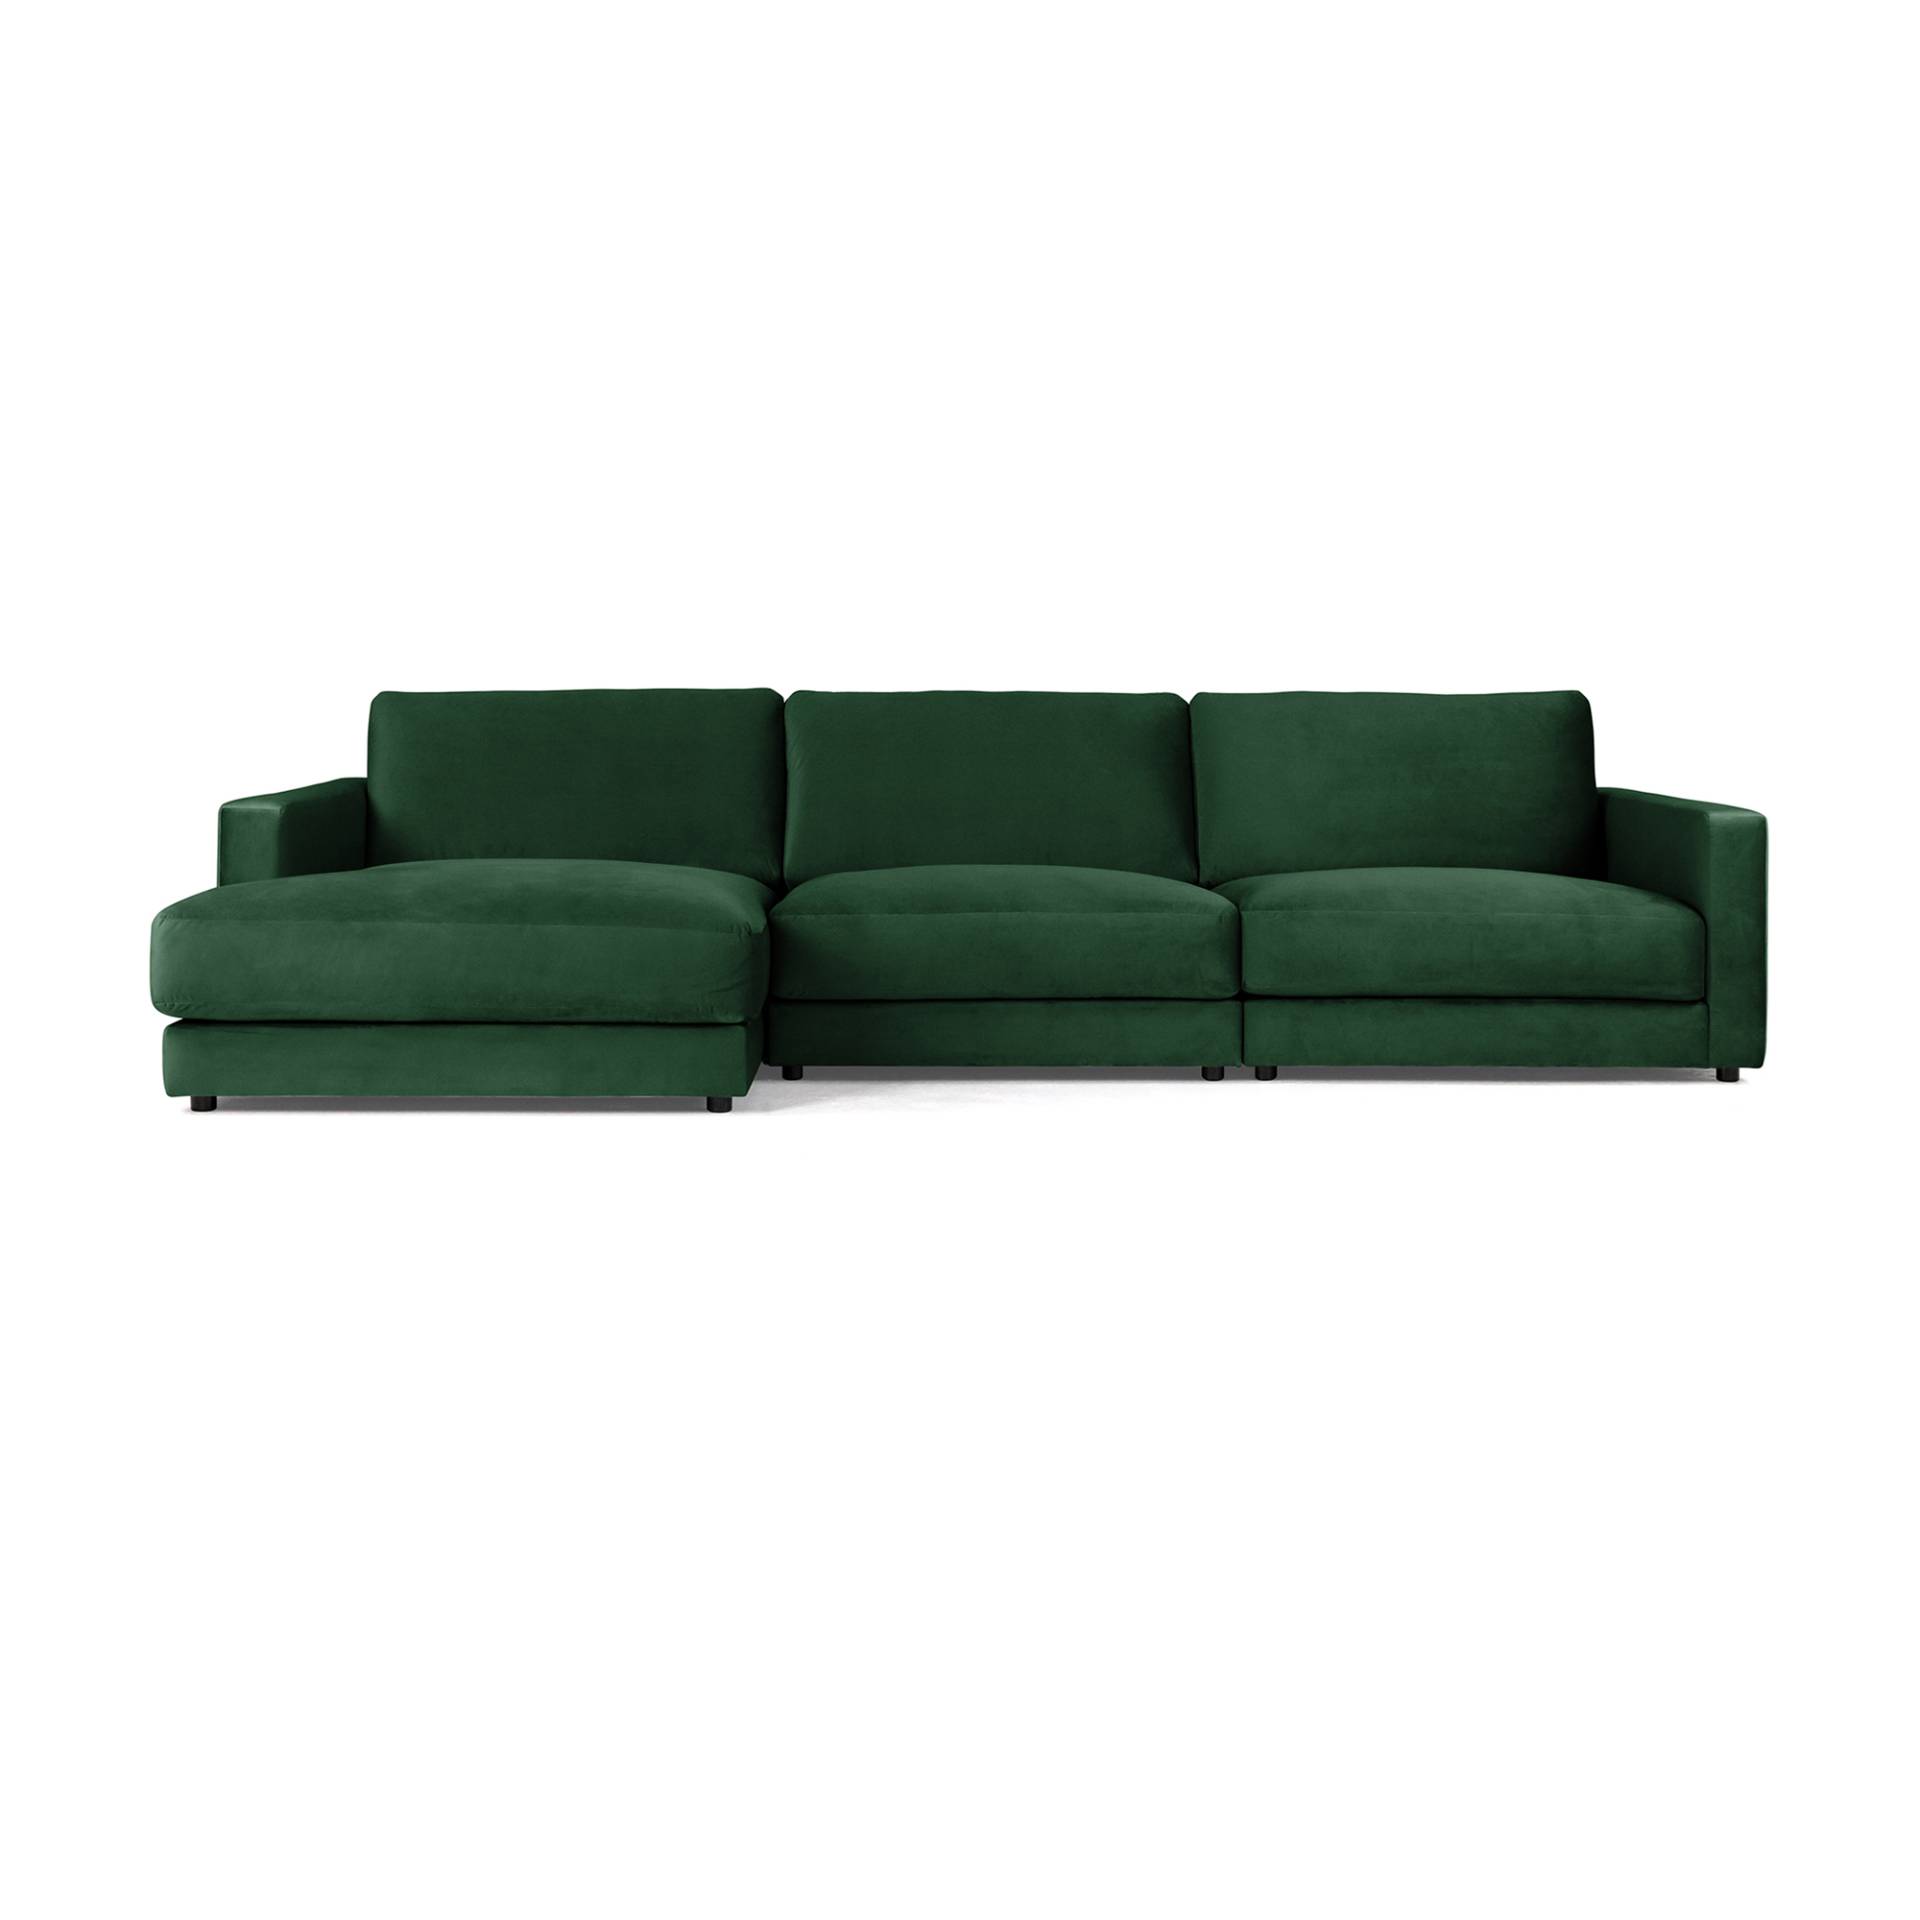 Sitzfeldt - Panama Sofa Chaiselounge links 331x170x82cm - grün/Samt Riviera Davis 38/LxBxH 331x170x82cm von Sitzfeldt